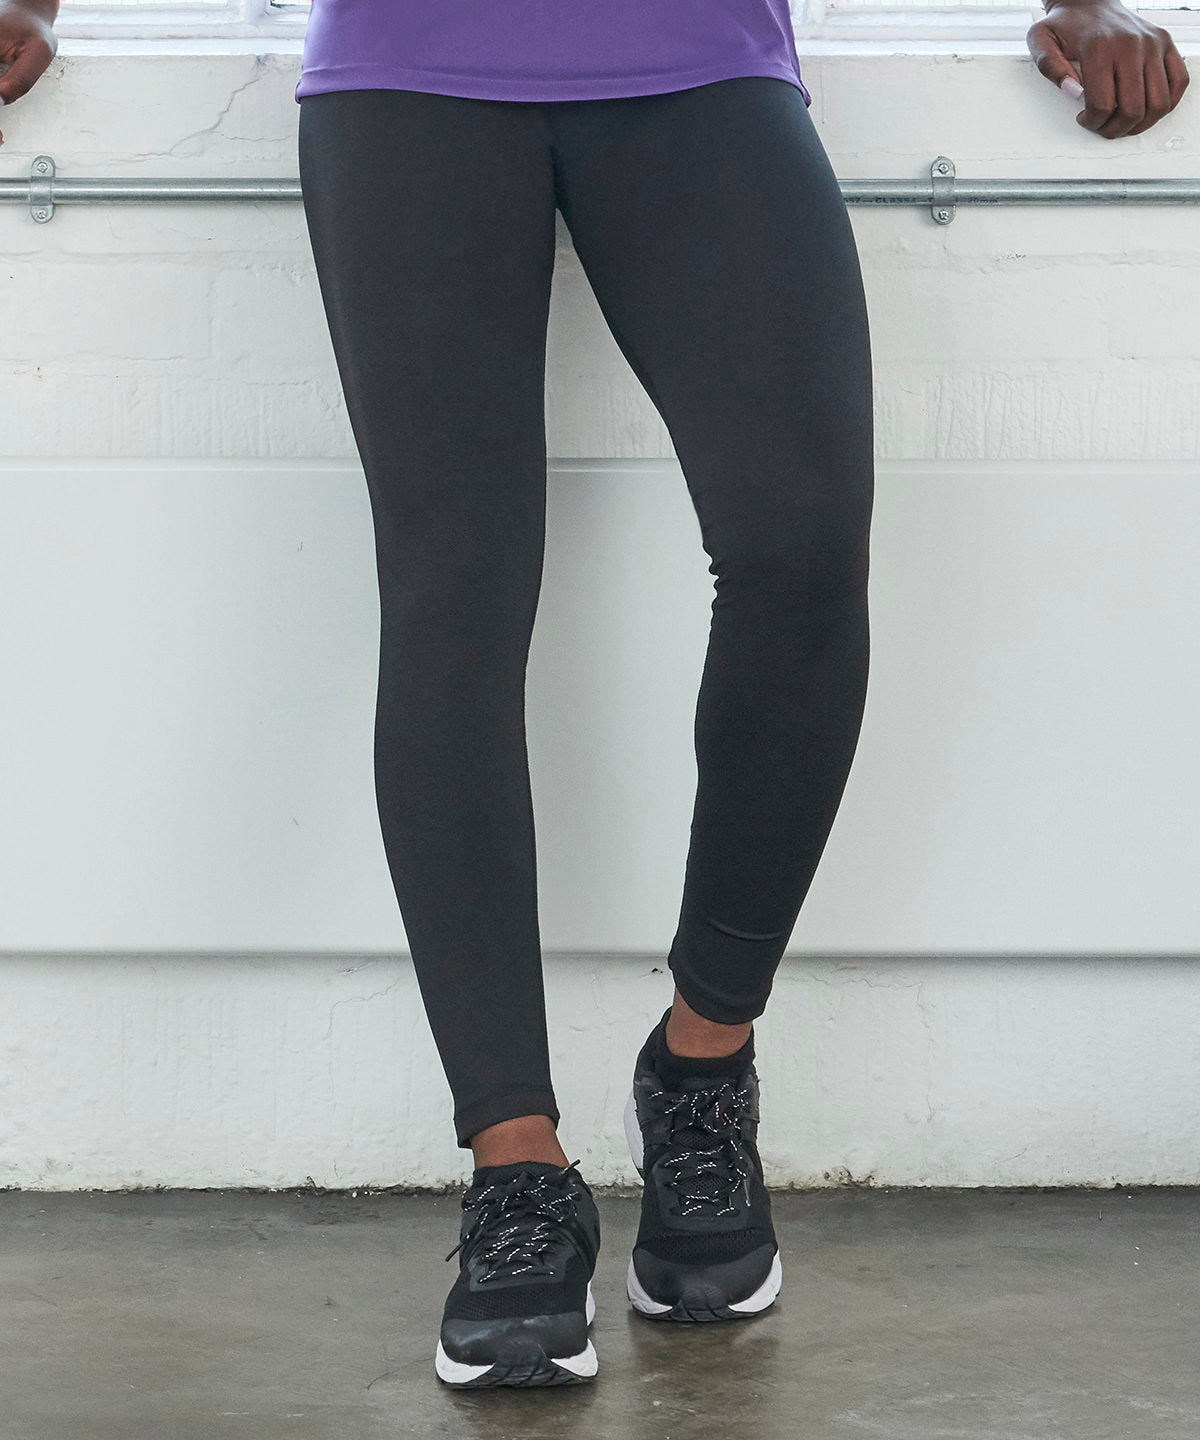 Leggings - Women's Cool Workout Leggings